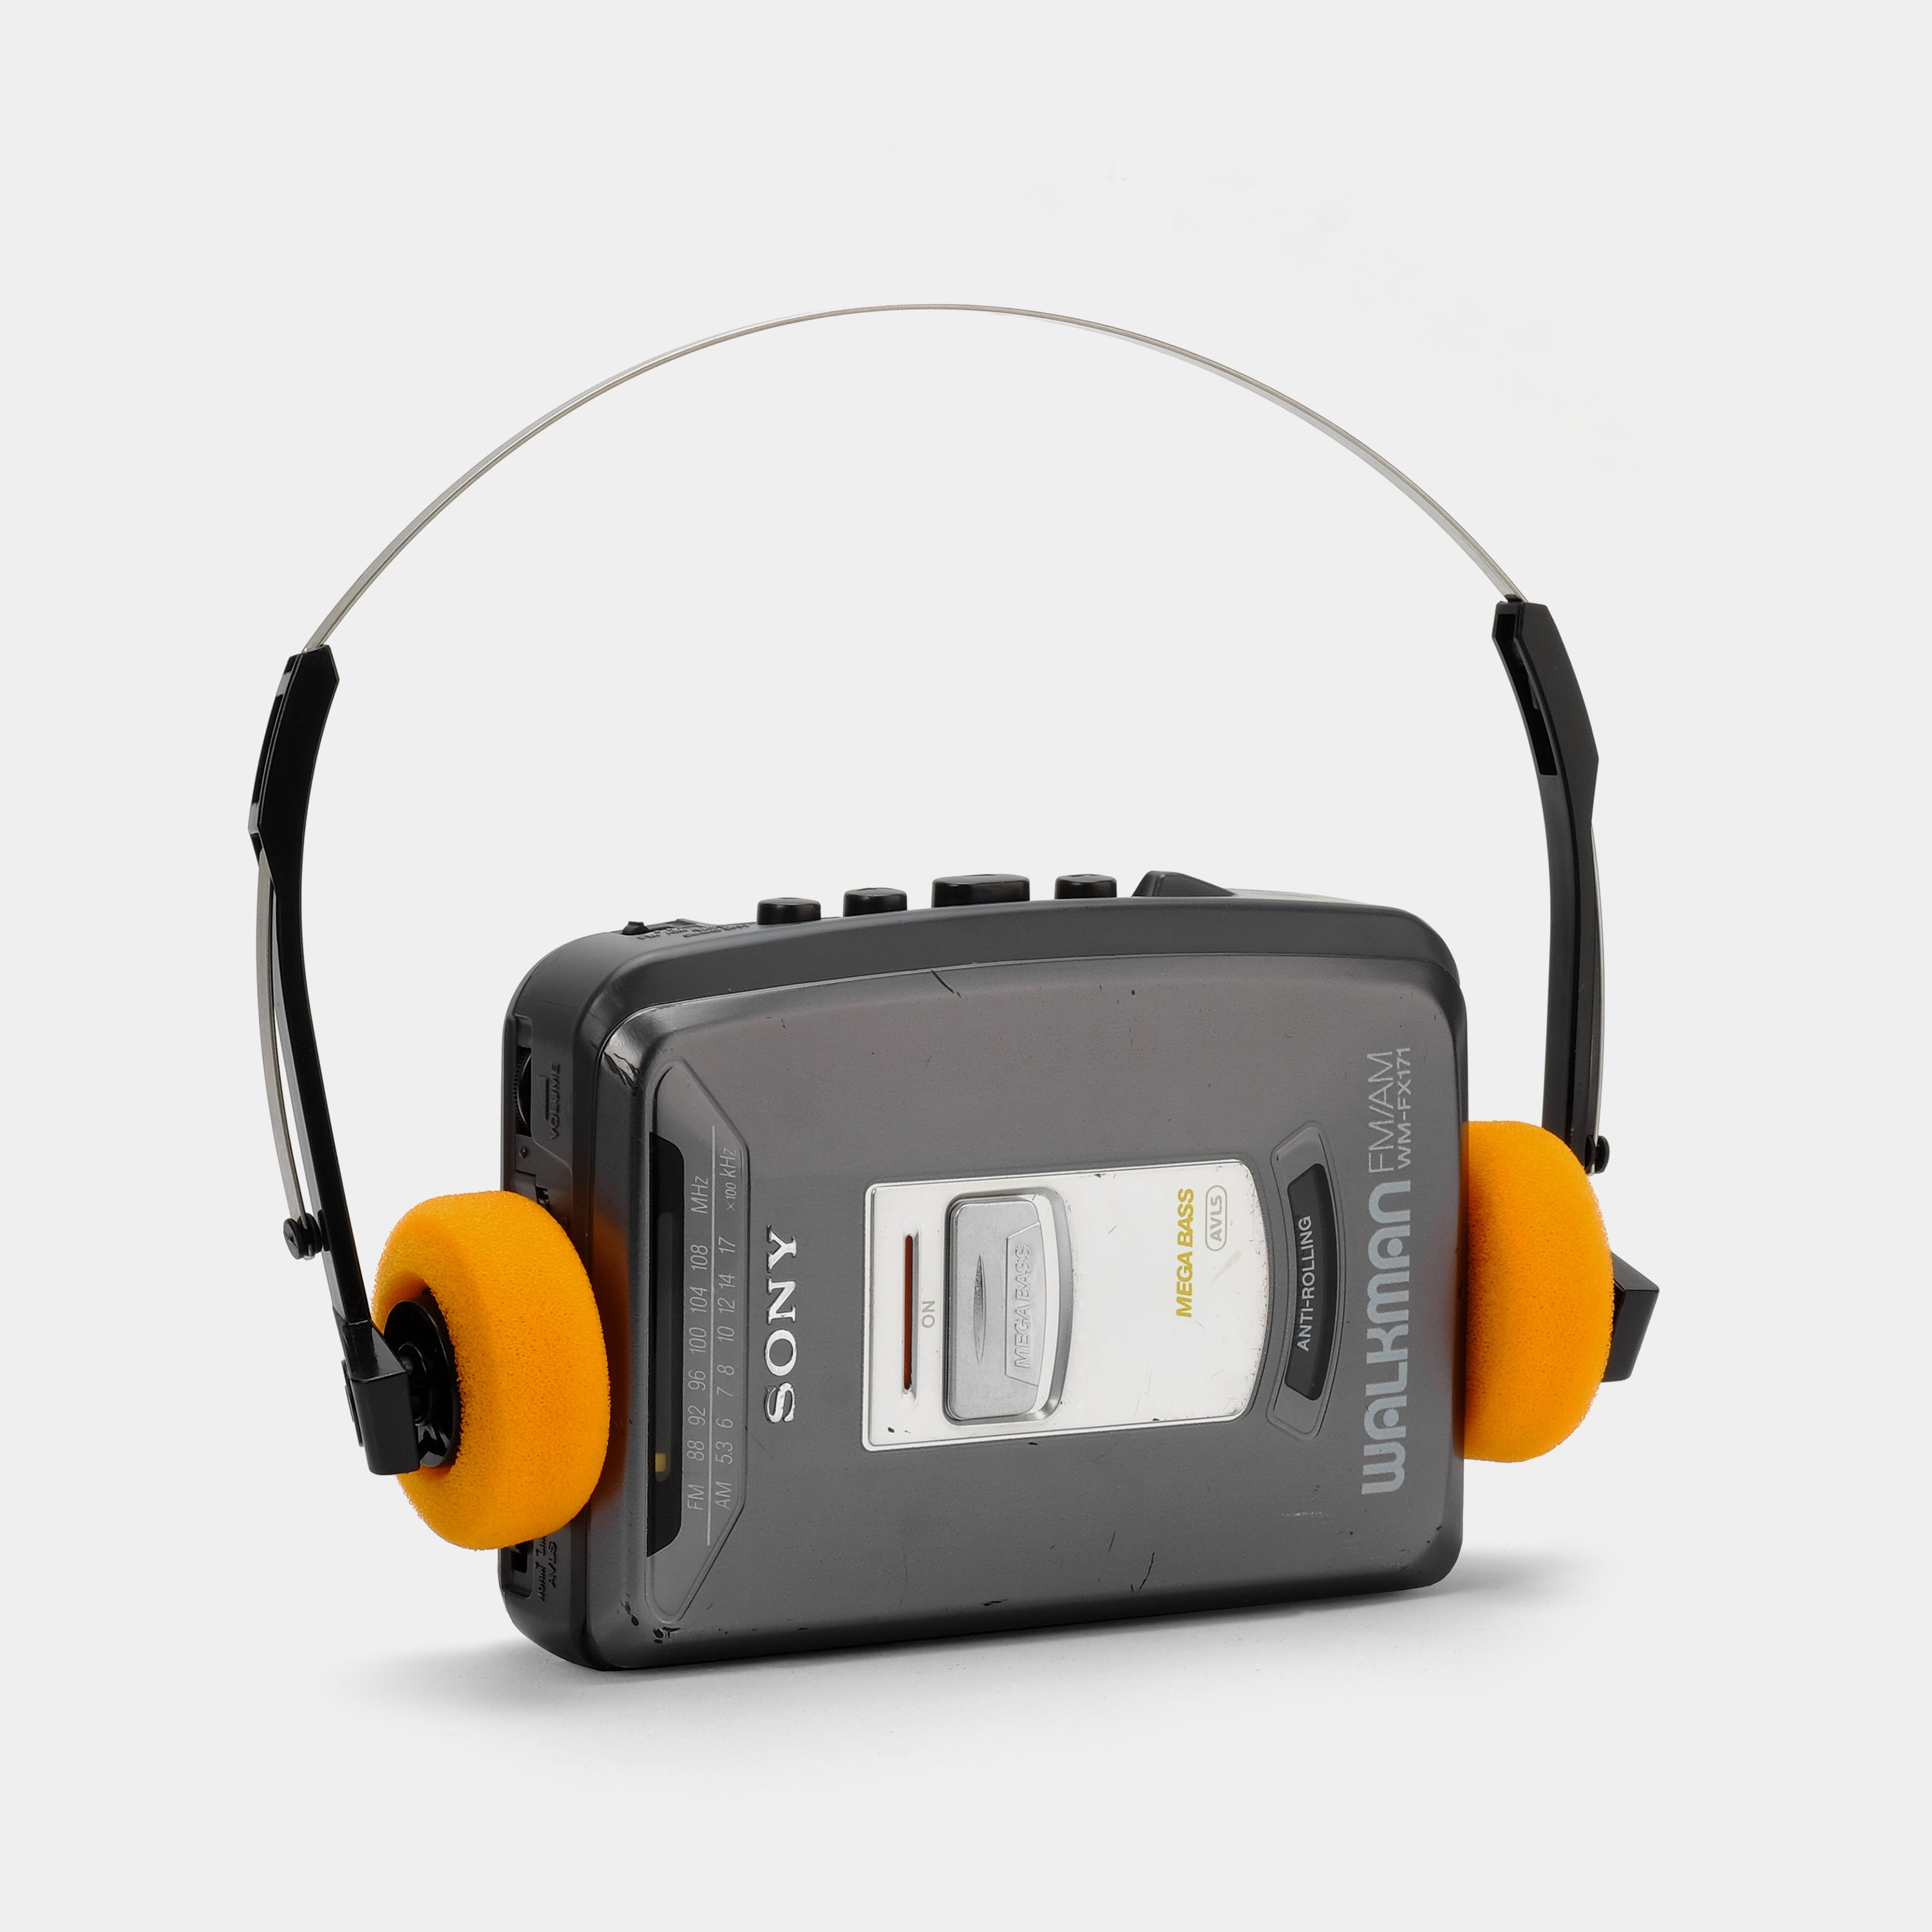 Sony Walkman WM-FX171 AM/FM Portable Cassette Player